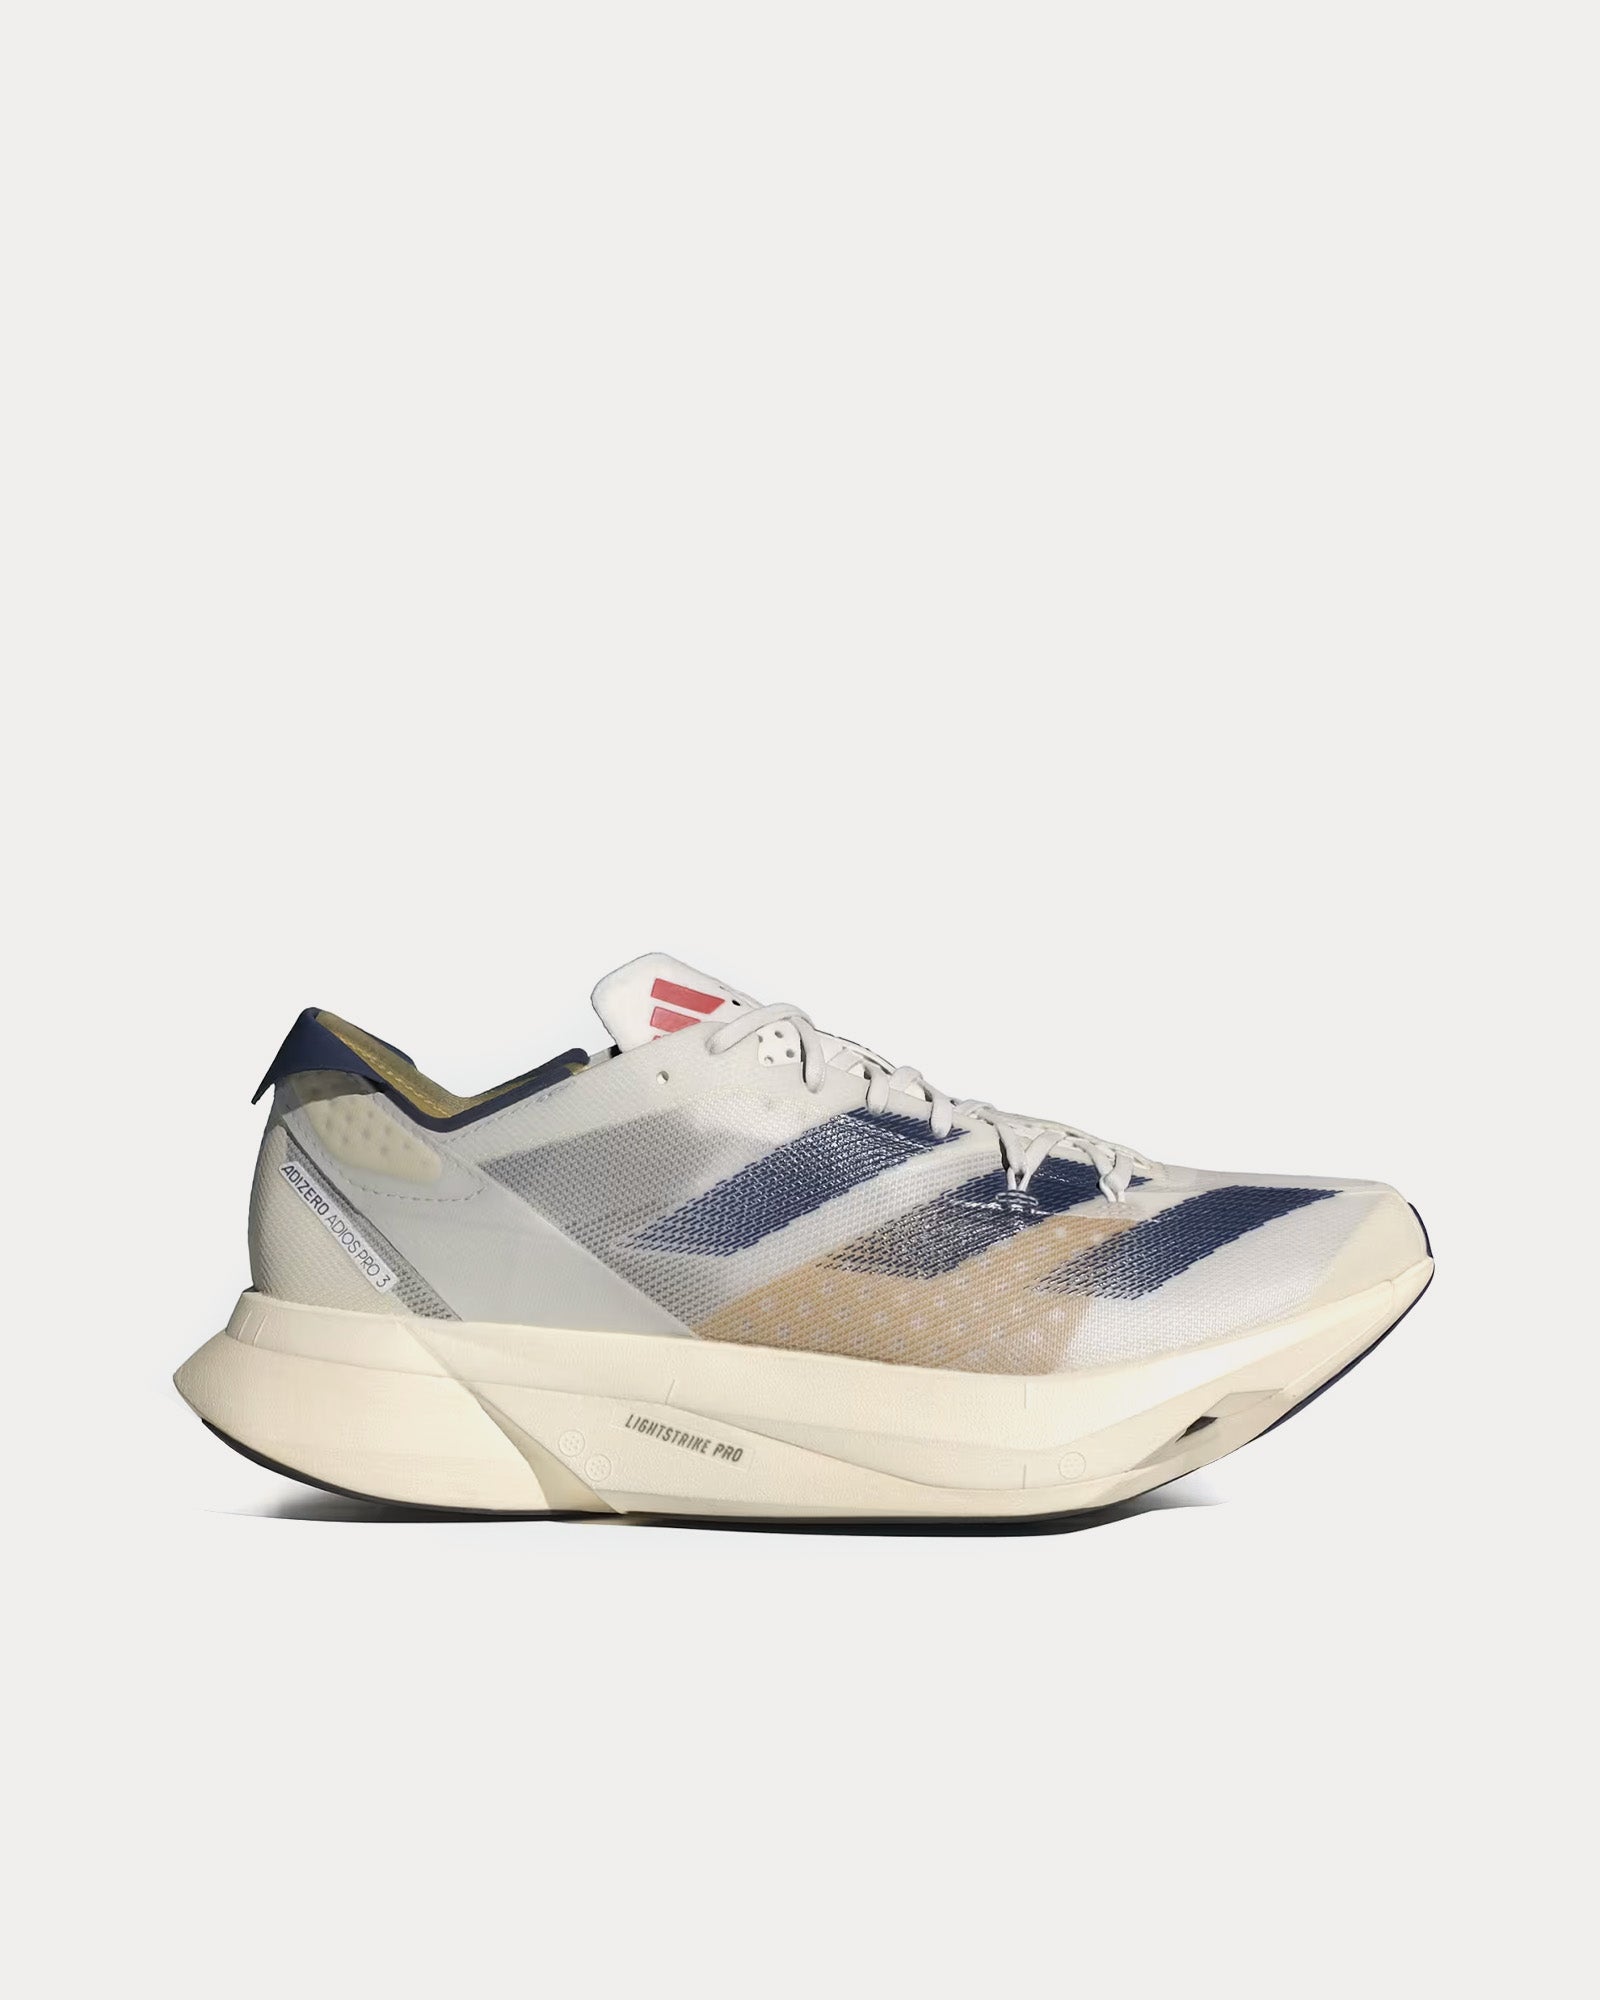 Adidas - Adios Pro 3 Cloud White / Dark Blue / Gold Metallic Running Shoes